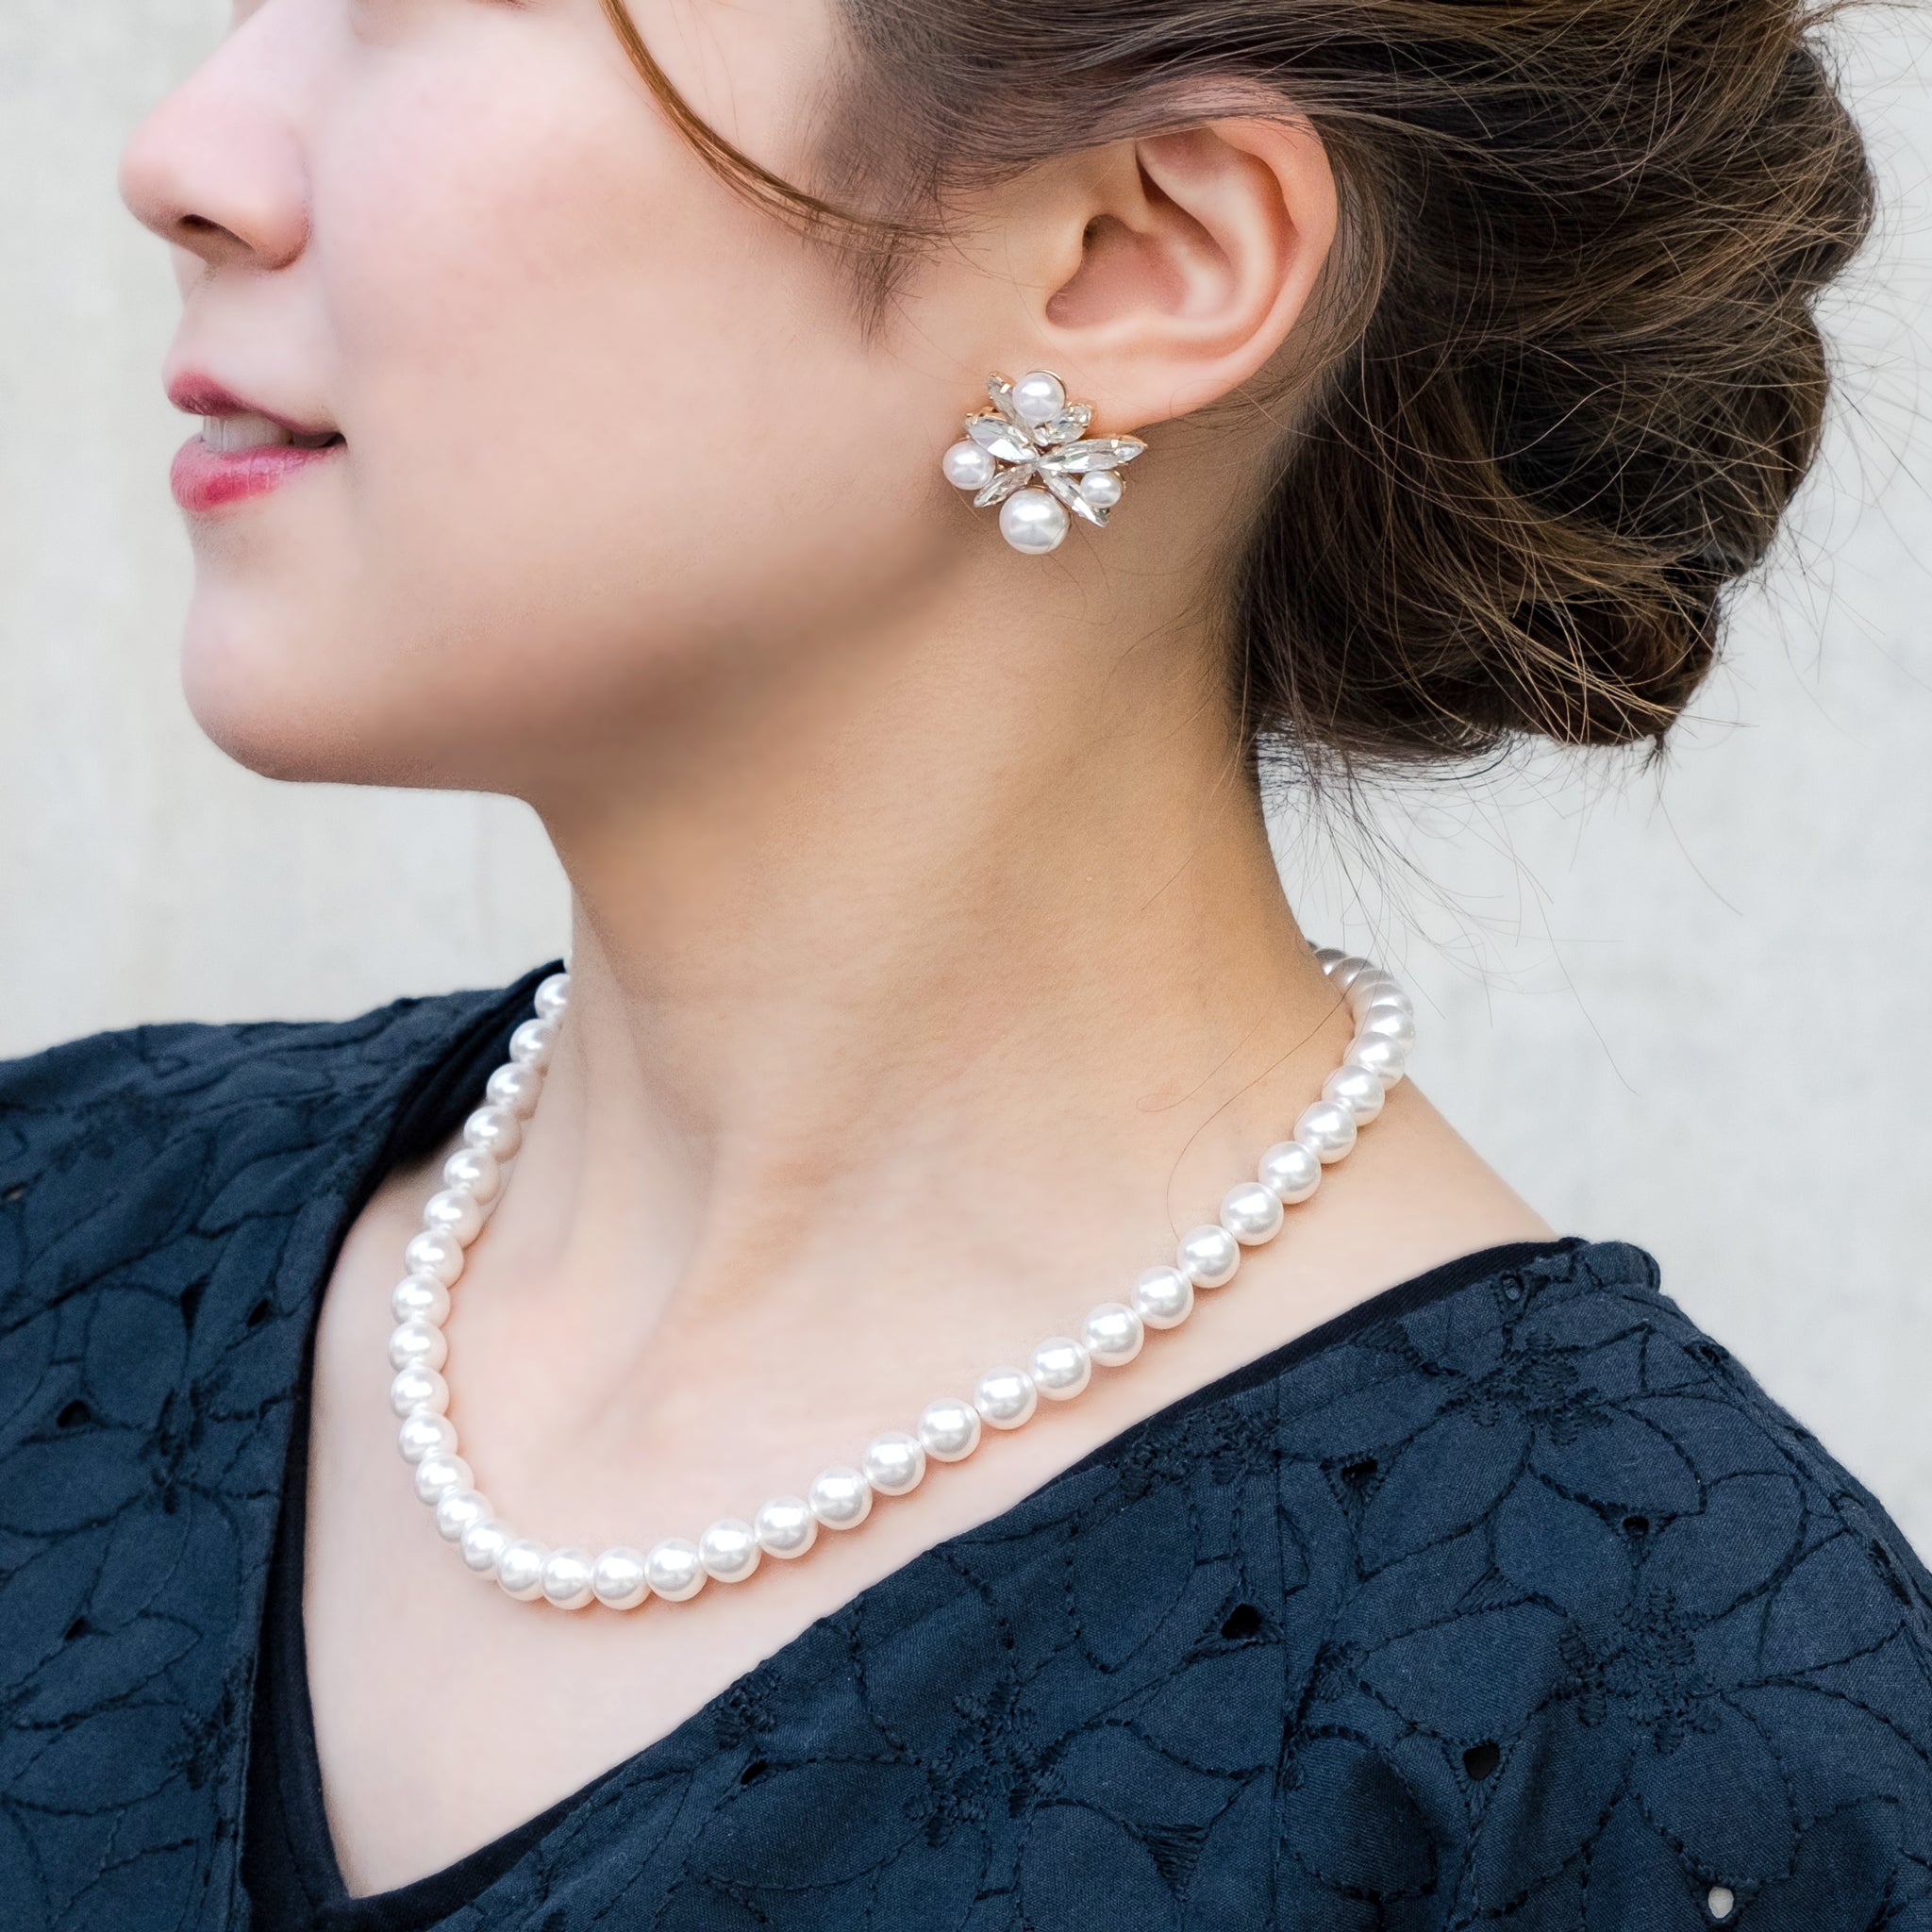 Pearl Bijou Flower motif earrings